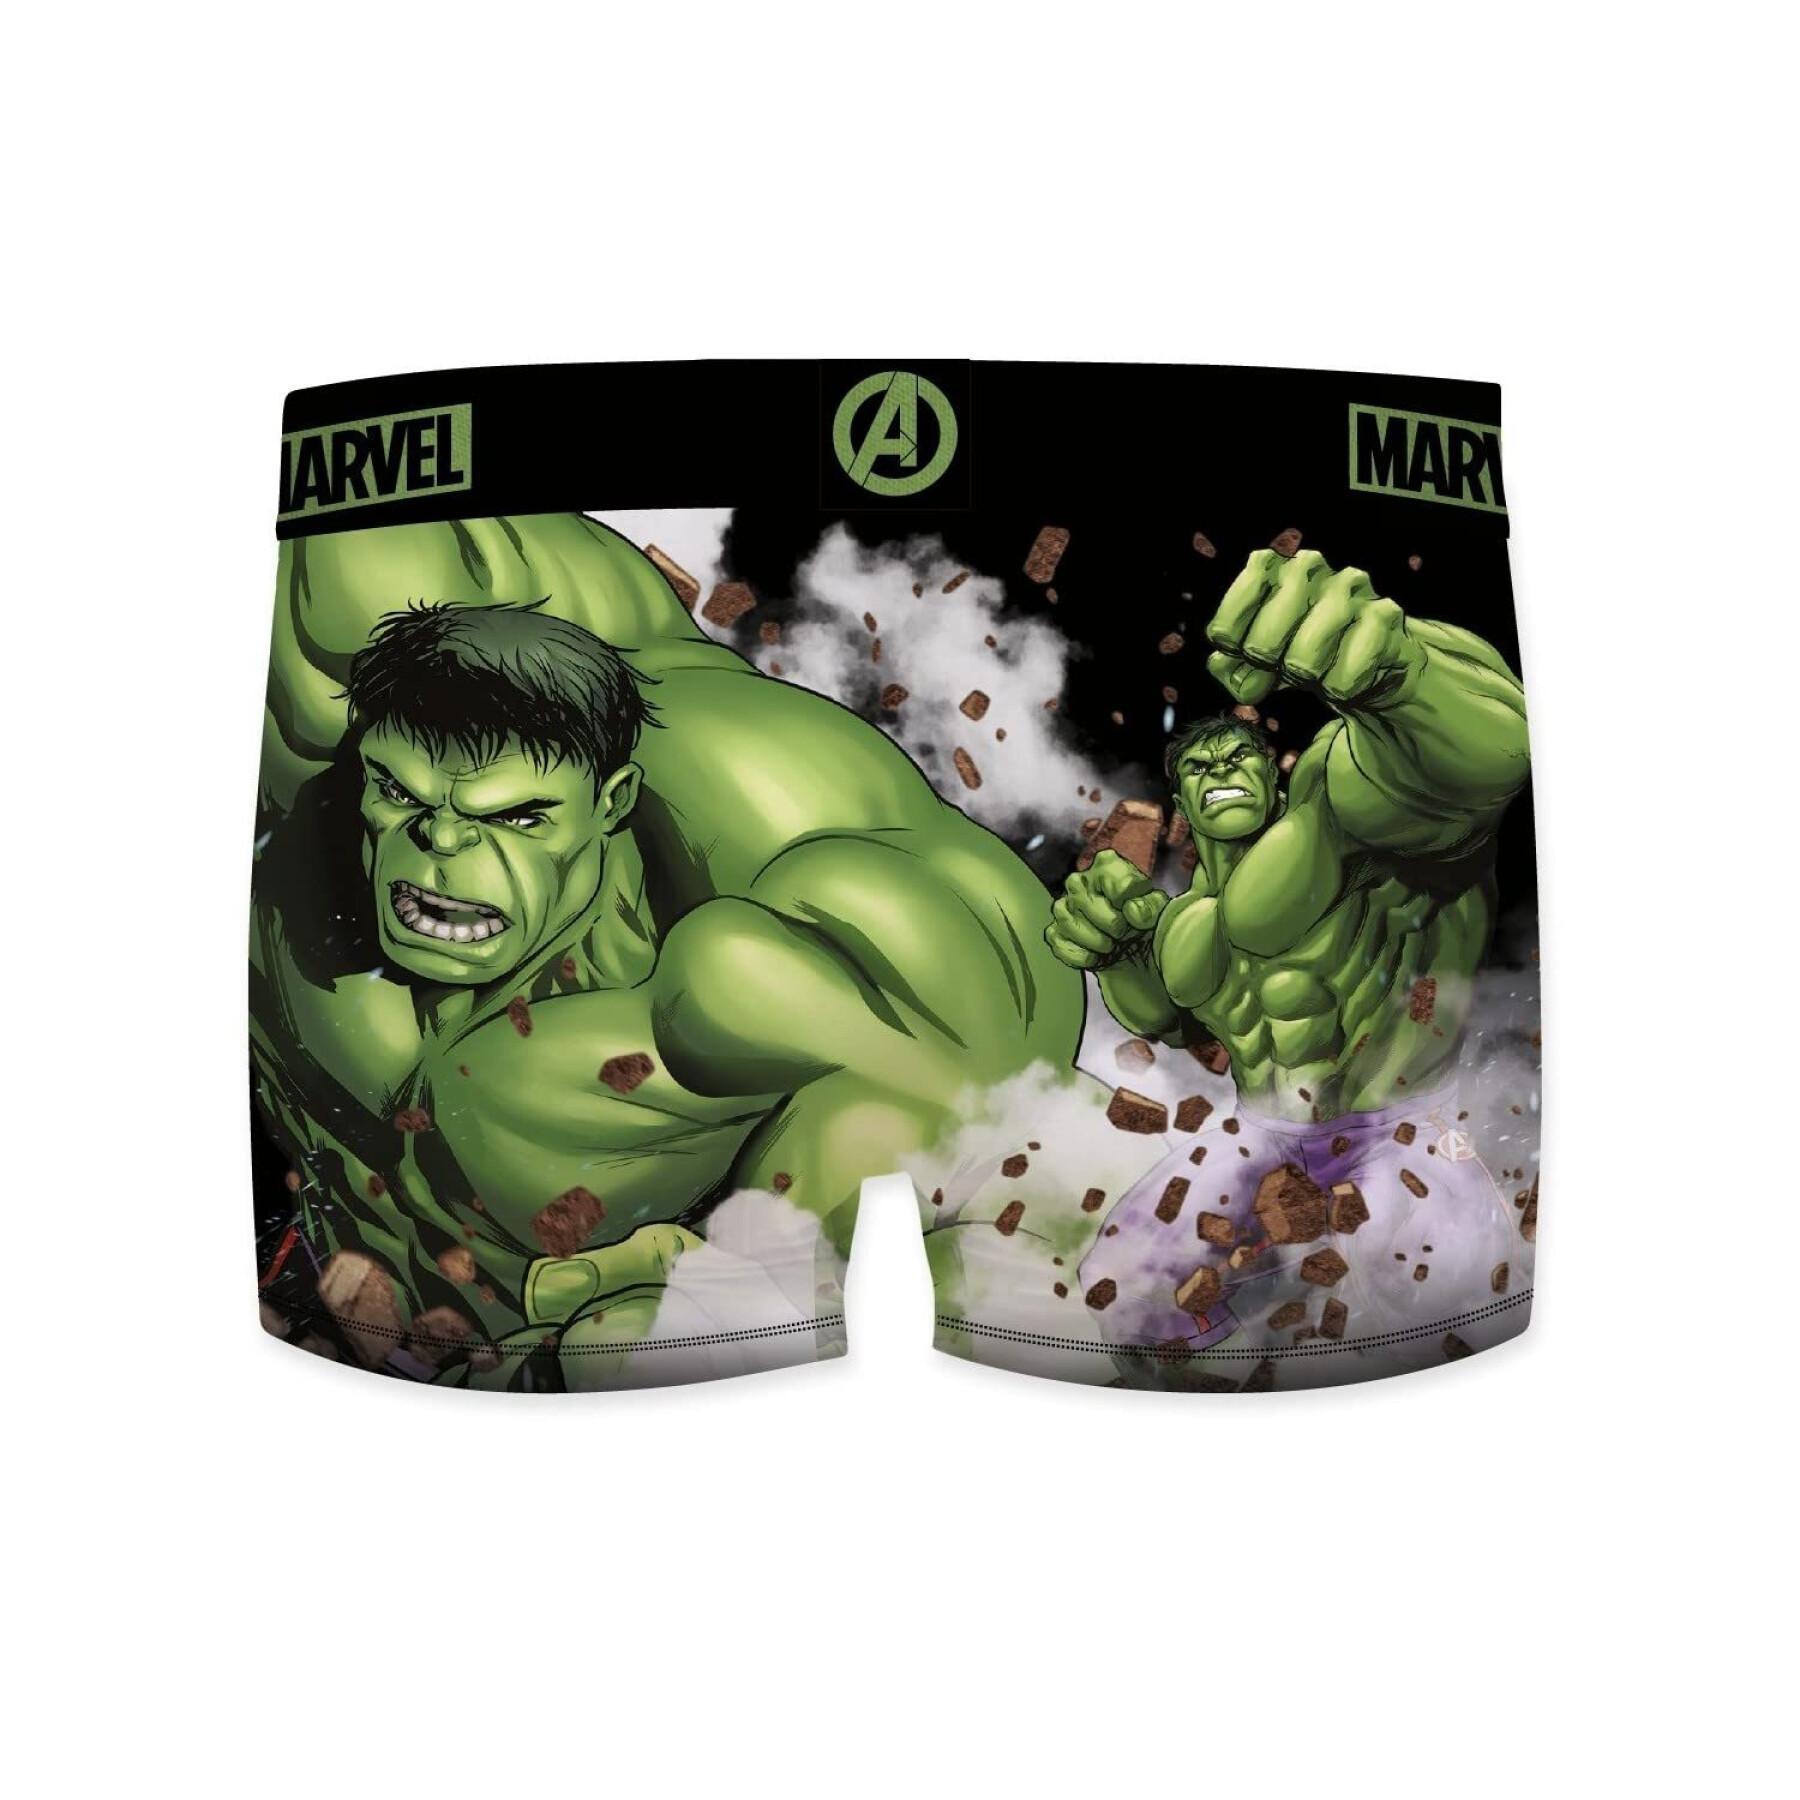 Children's boxer shorts Freegun Marvel hulk